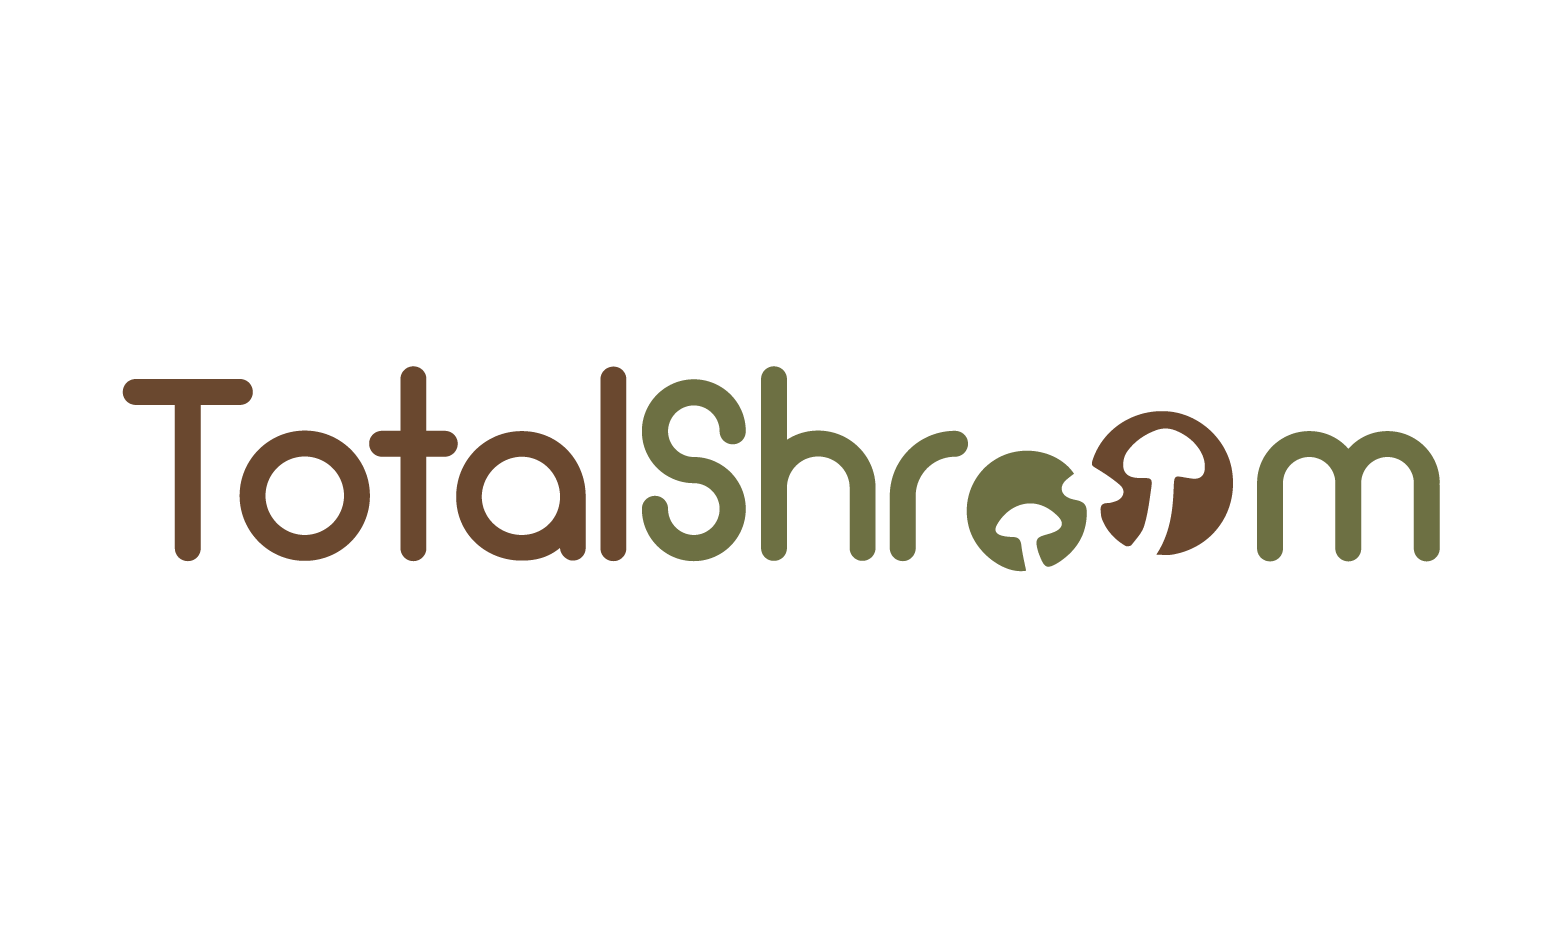 TotalShroom.com - Creative brandable domain for sale